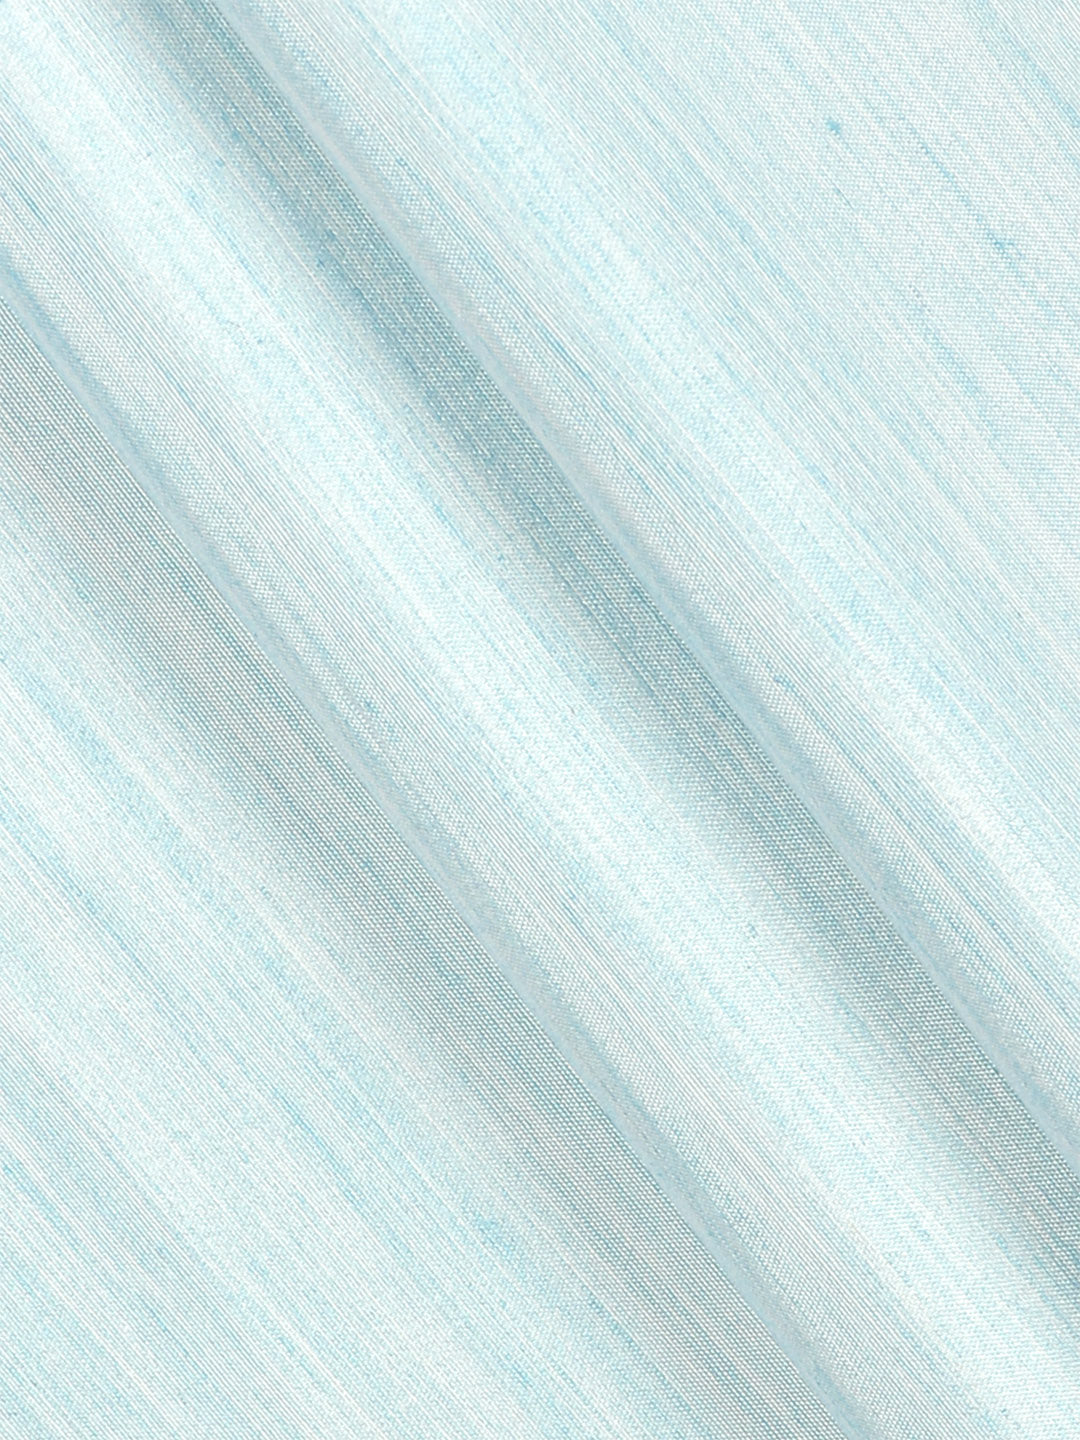 Cotton Light Blue Colour Plain Shirt Fabric Galaxy Art